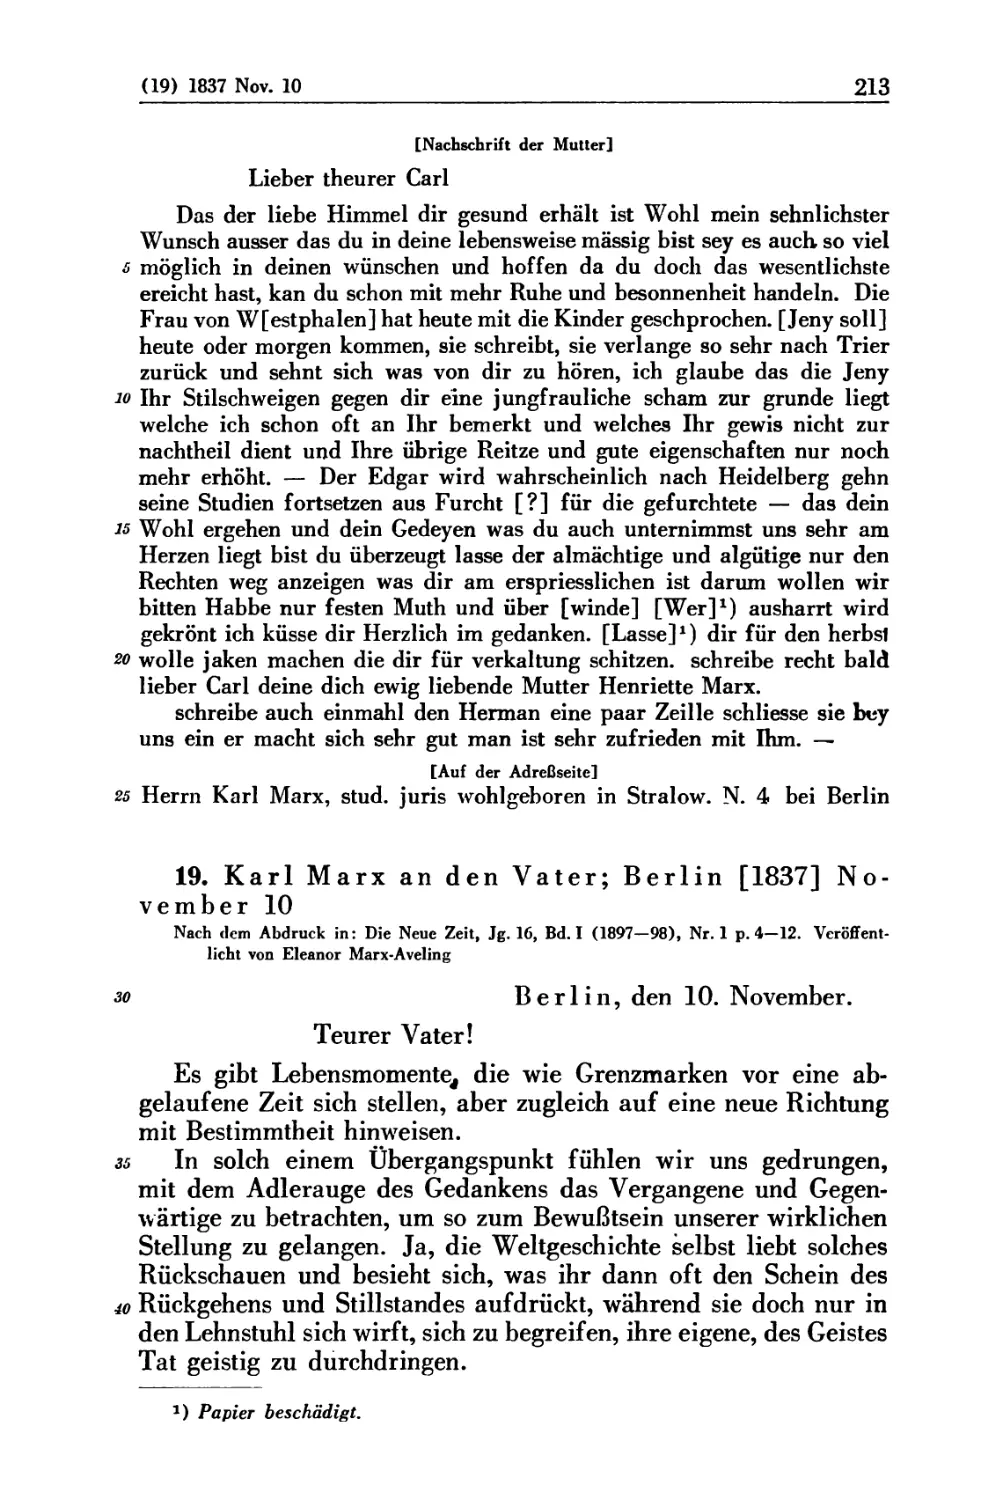 19. Karl Marx an den Vater; Berlin [1837] November 10